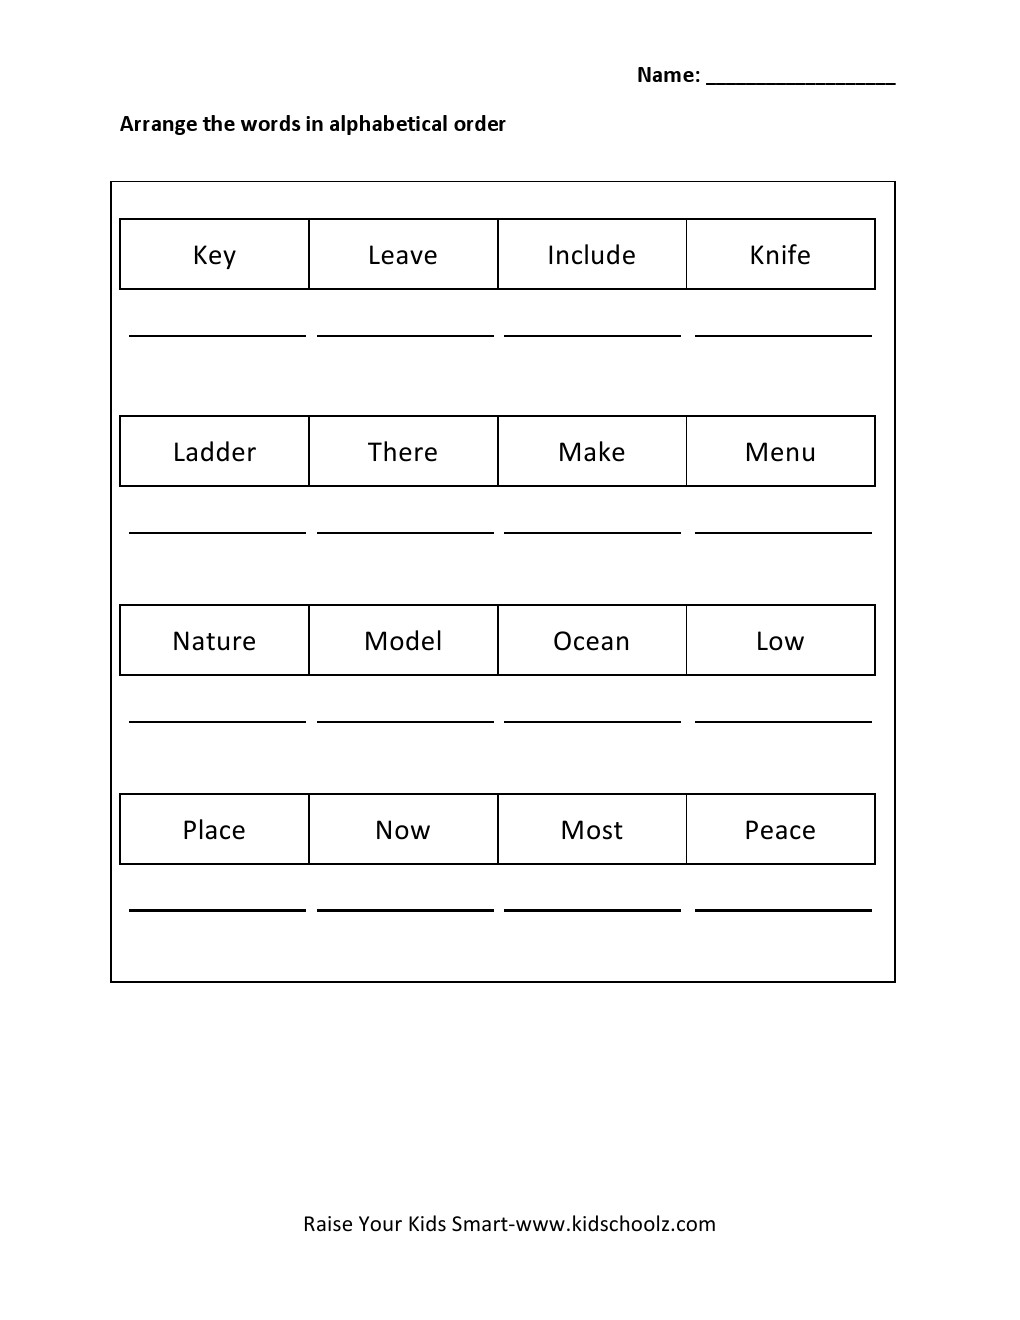 Grade 1 - Alphabetical Order Arrangement Worksheet